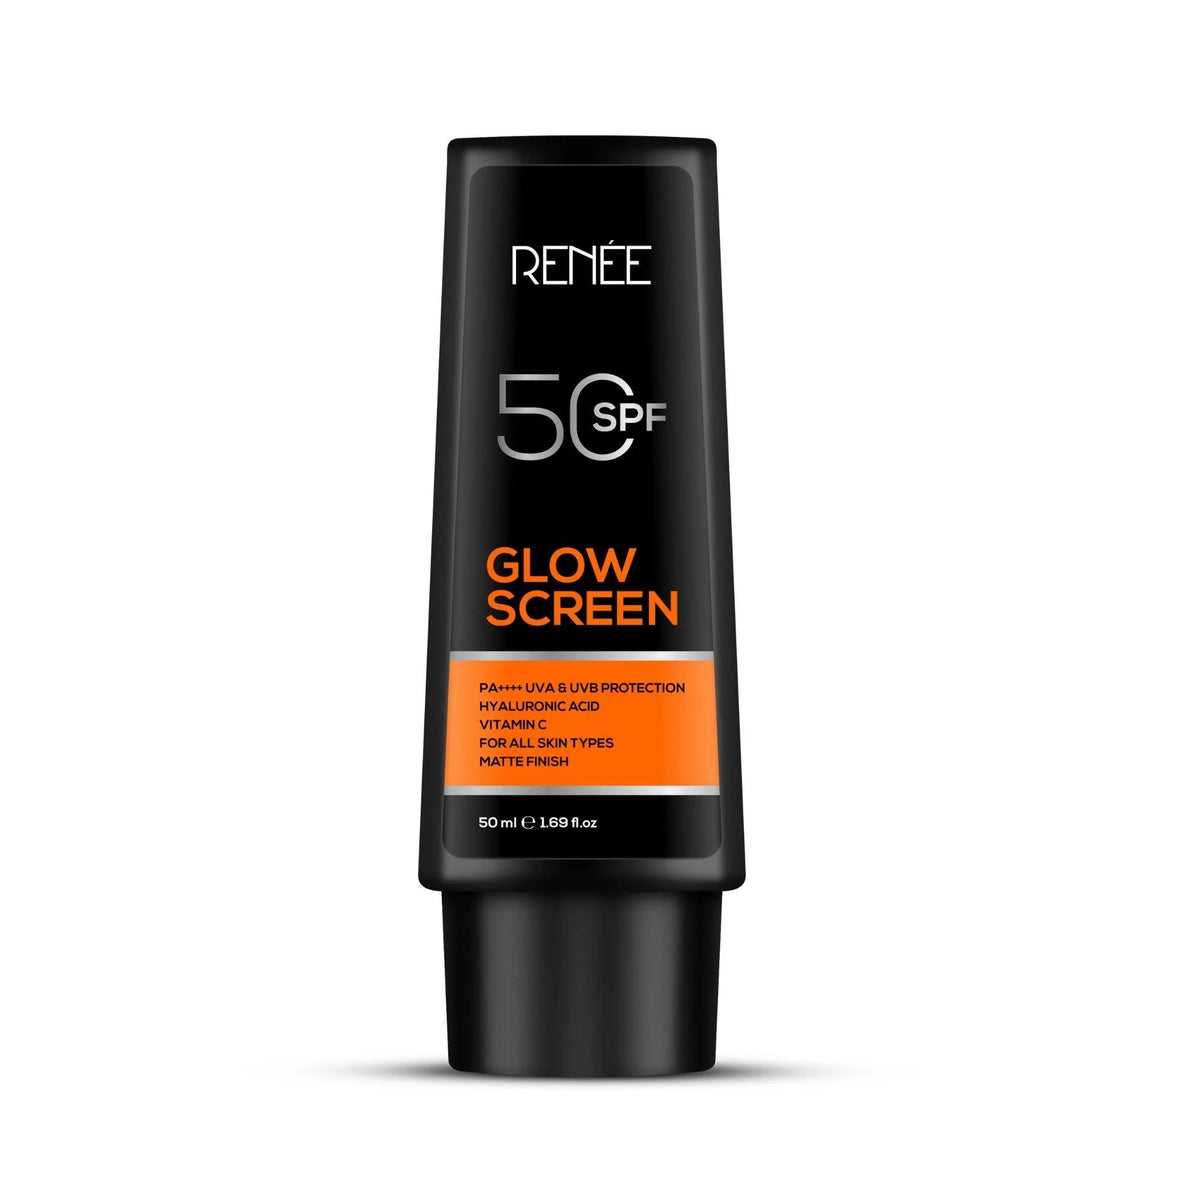 RENEE Glowscreen SPF 50 Sunscreen